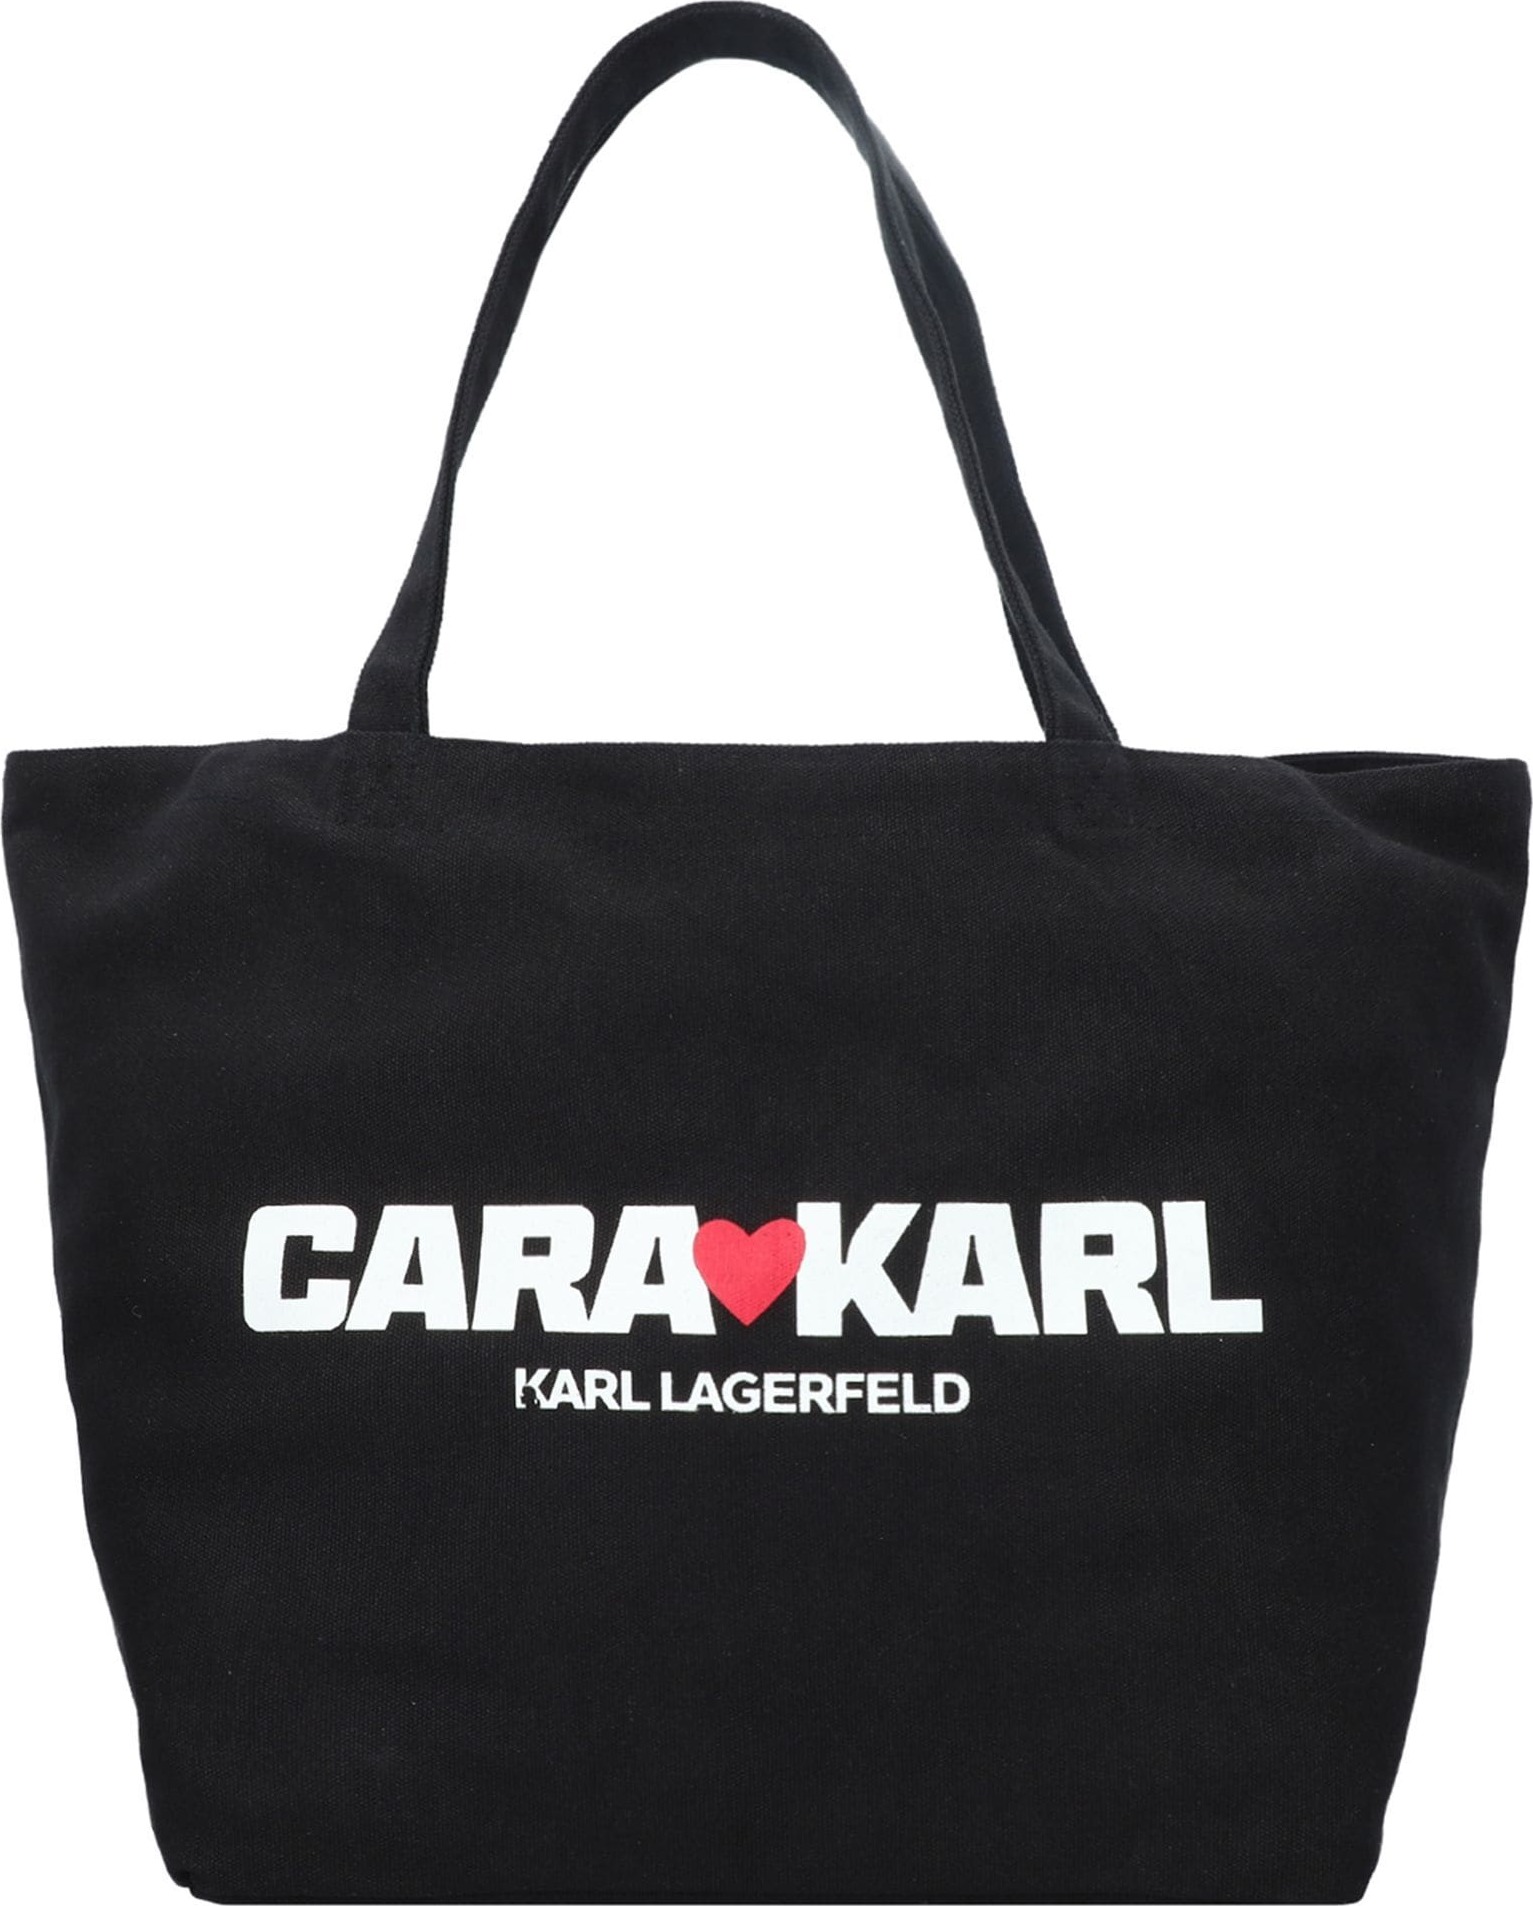 KARL LAGERFELD x CARA DELEVINGNE Nákupní taška červená / černá / bílá